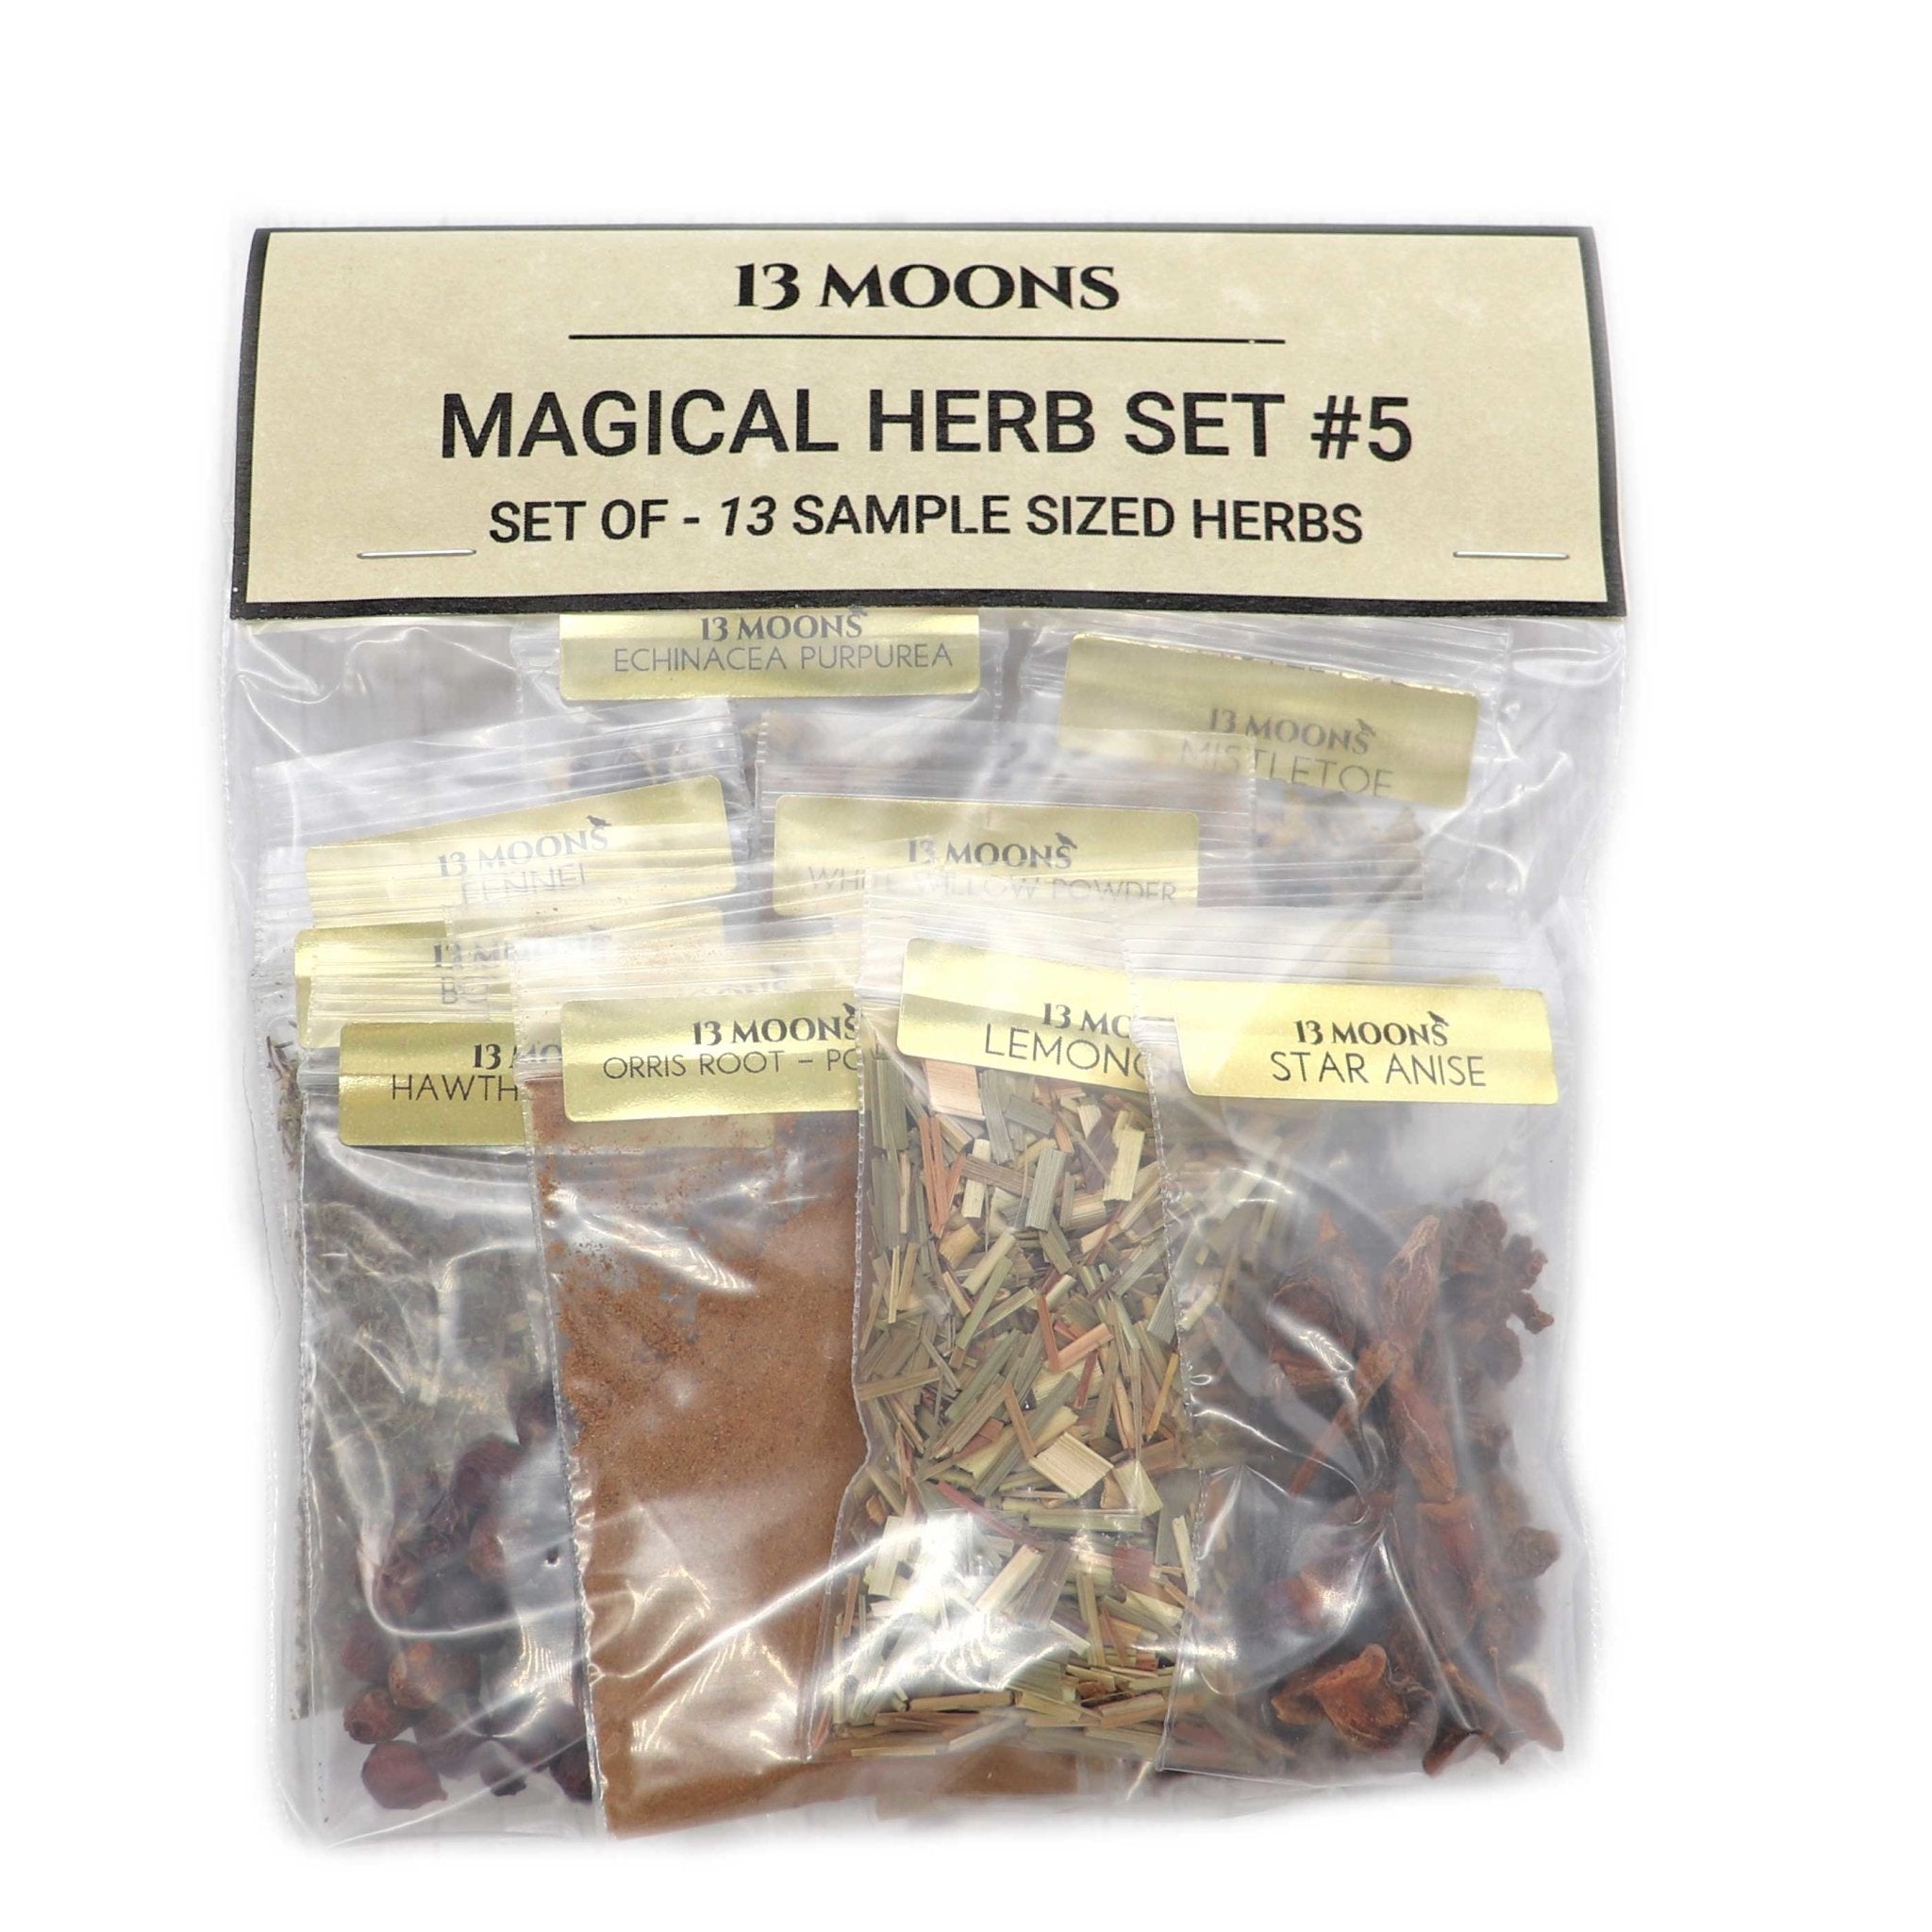 Magical Herb Set #5 - 13 Moons